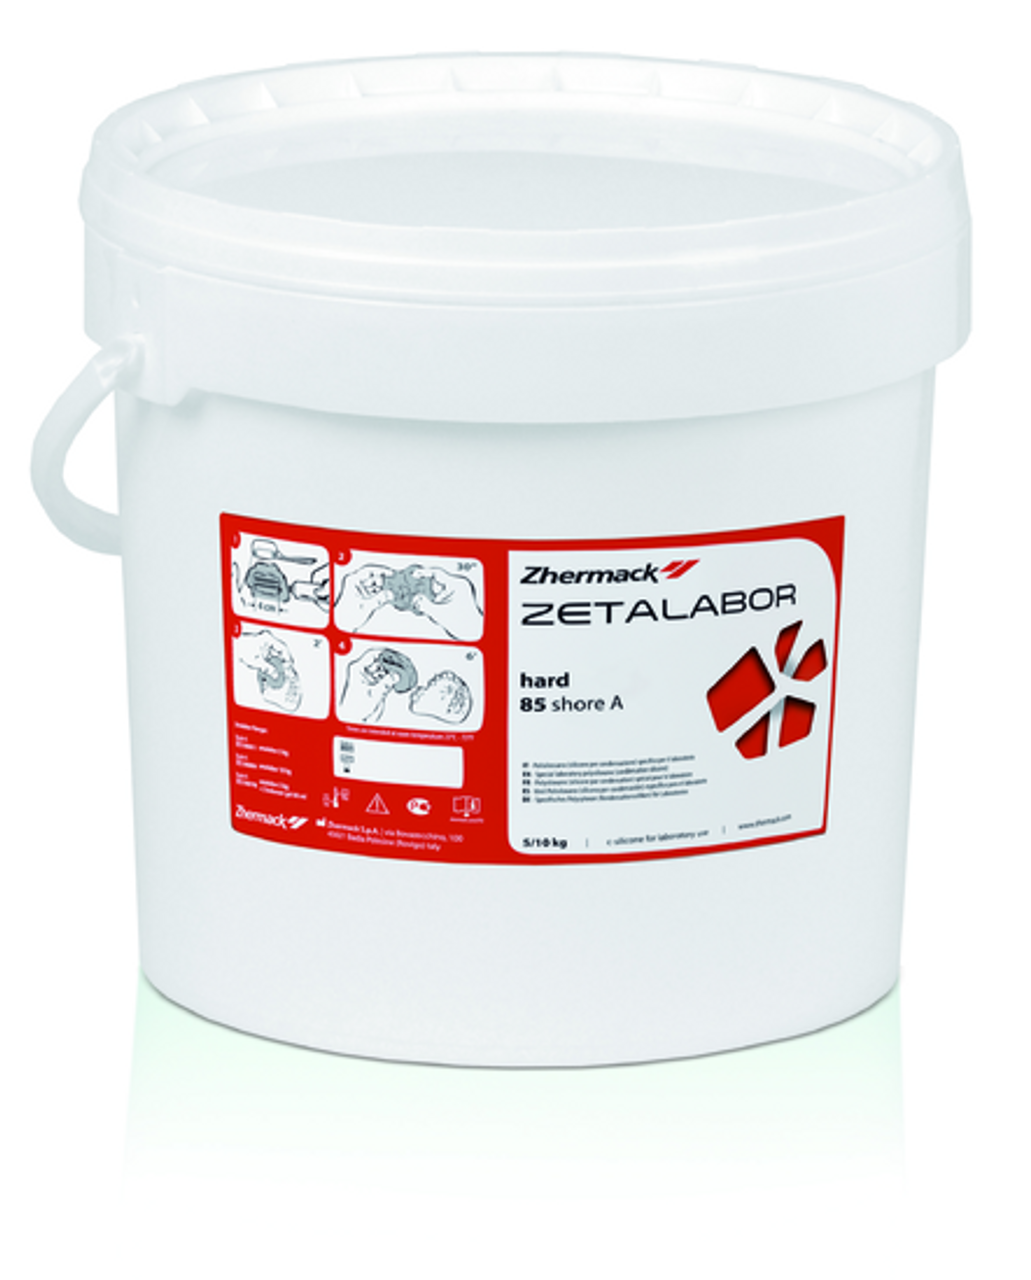 Zhermack Zetalabor Impression Material C-Silicone Lab Putty, 10 kg Tub, 1 Spoon